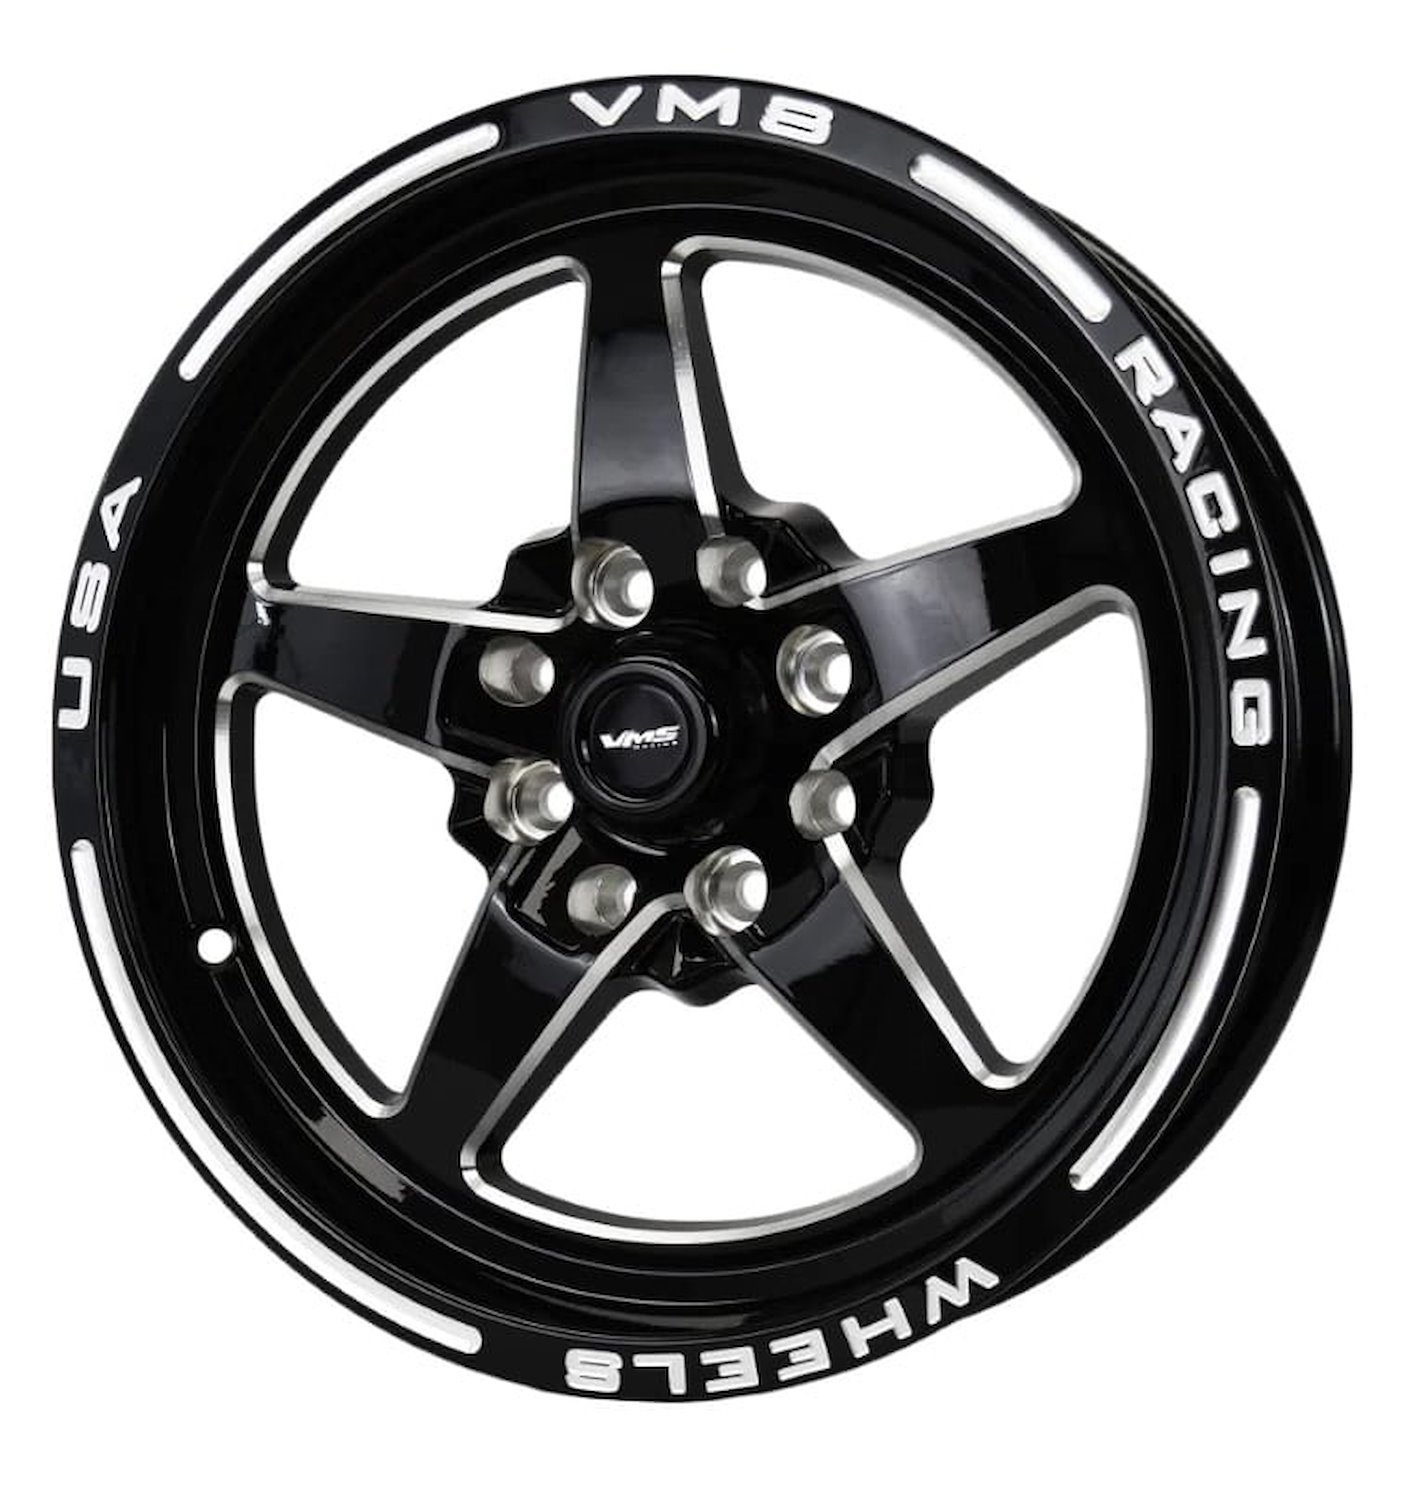 VWST054 V-Star Wheel, Size: 15" x 3.5", Bolt Pattern: 5 x 4 1/2" (114.3 mm) [Finish: Gloss Black Milled]